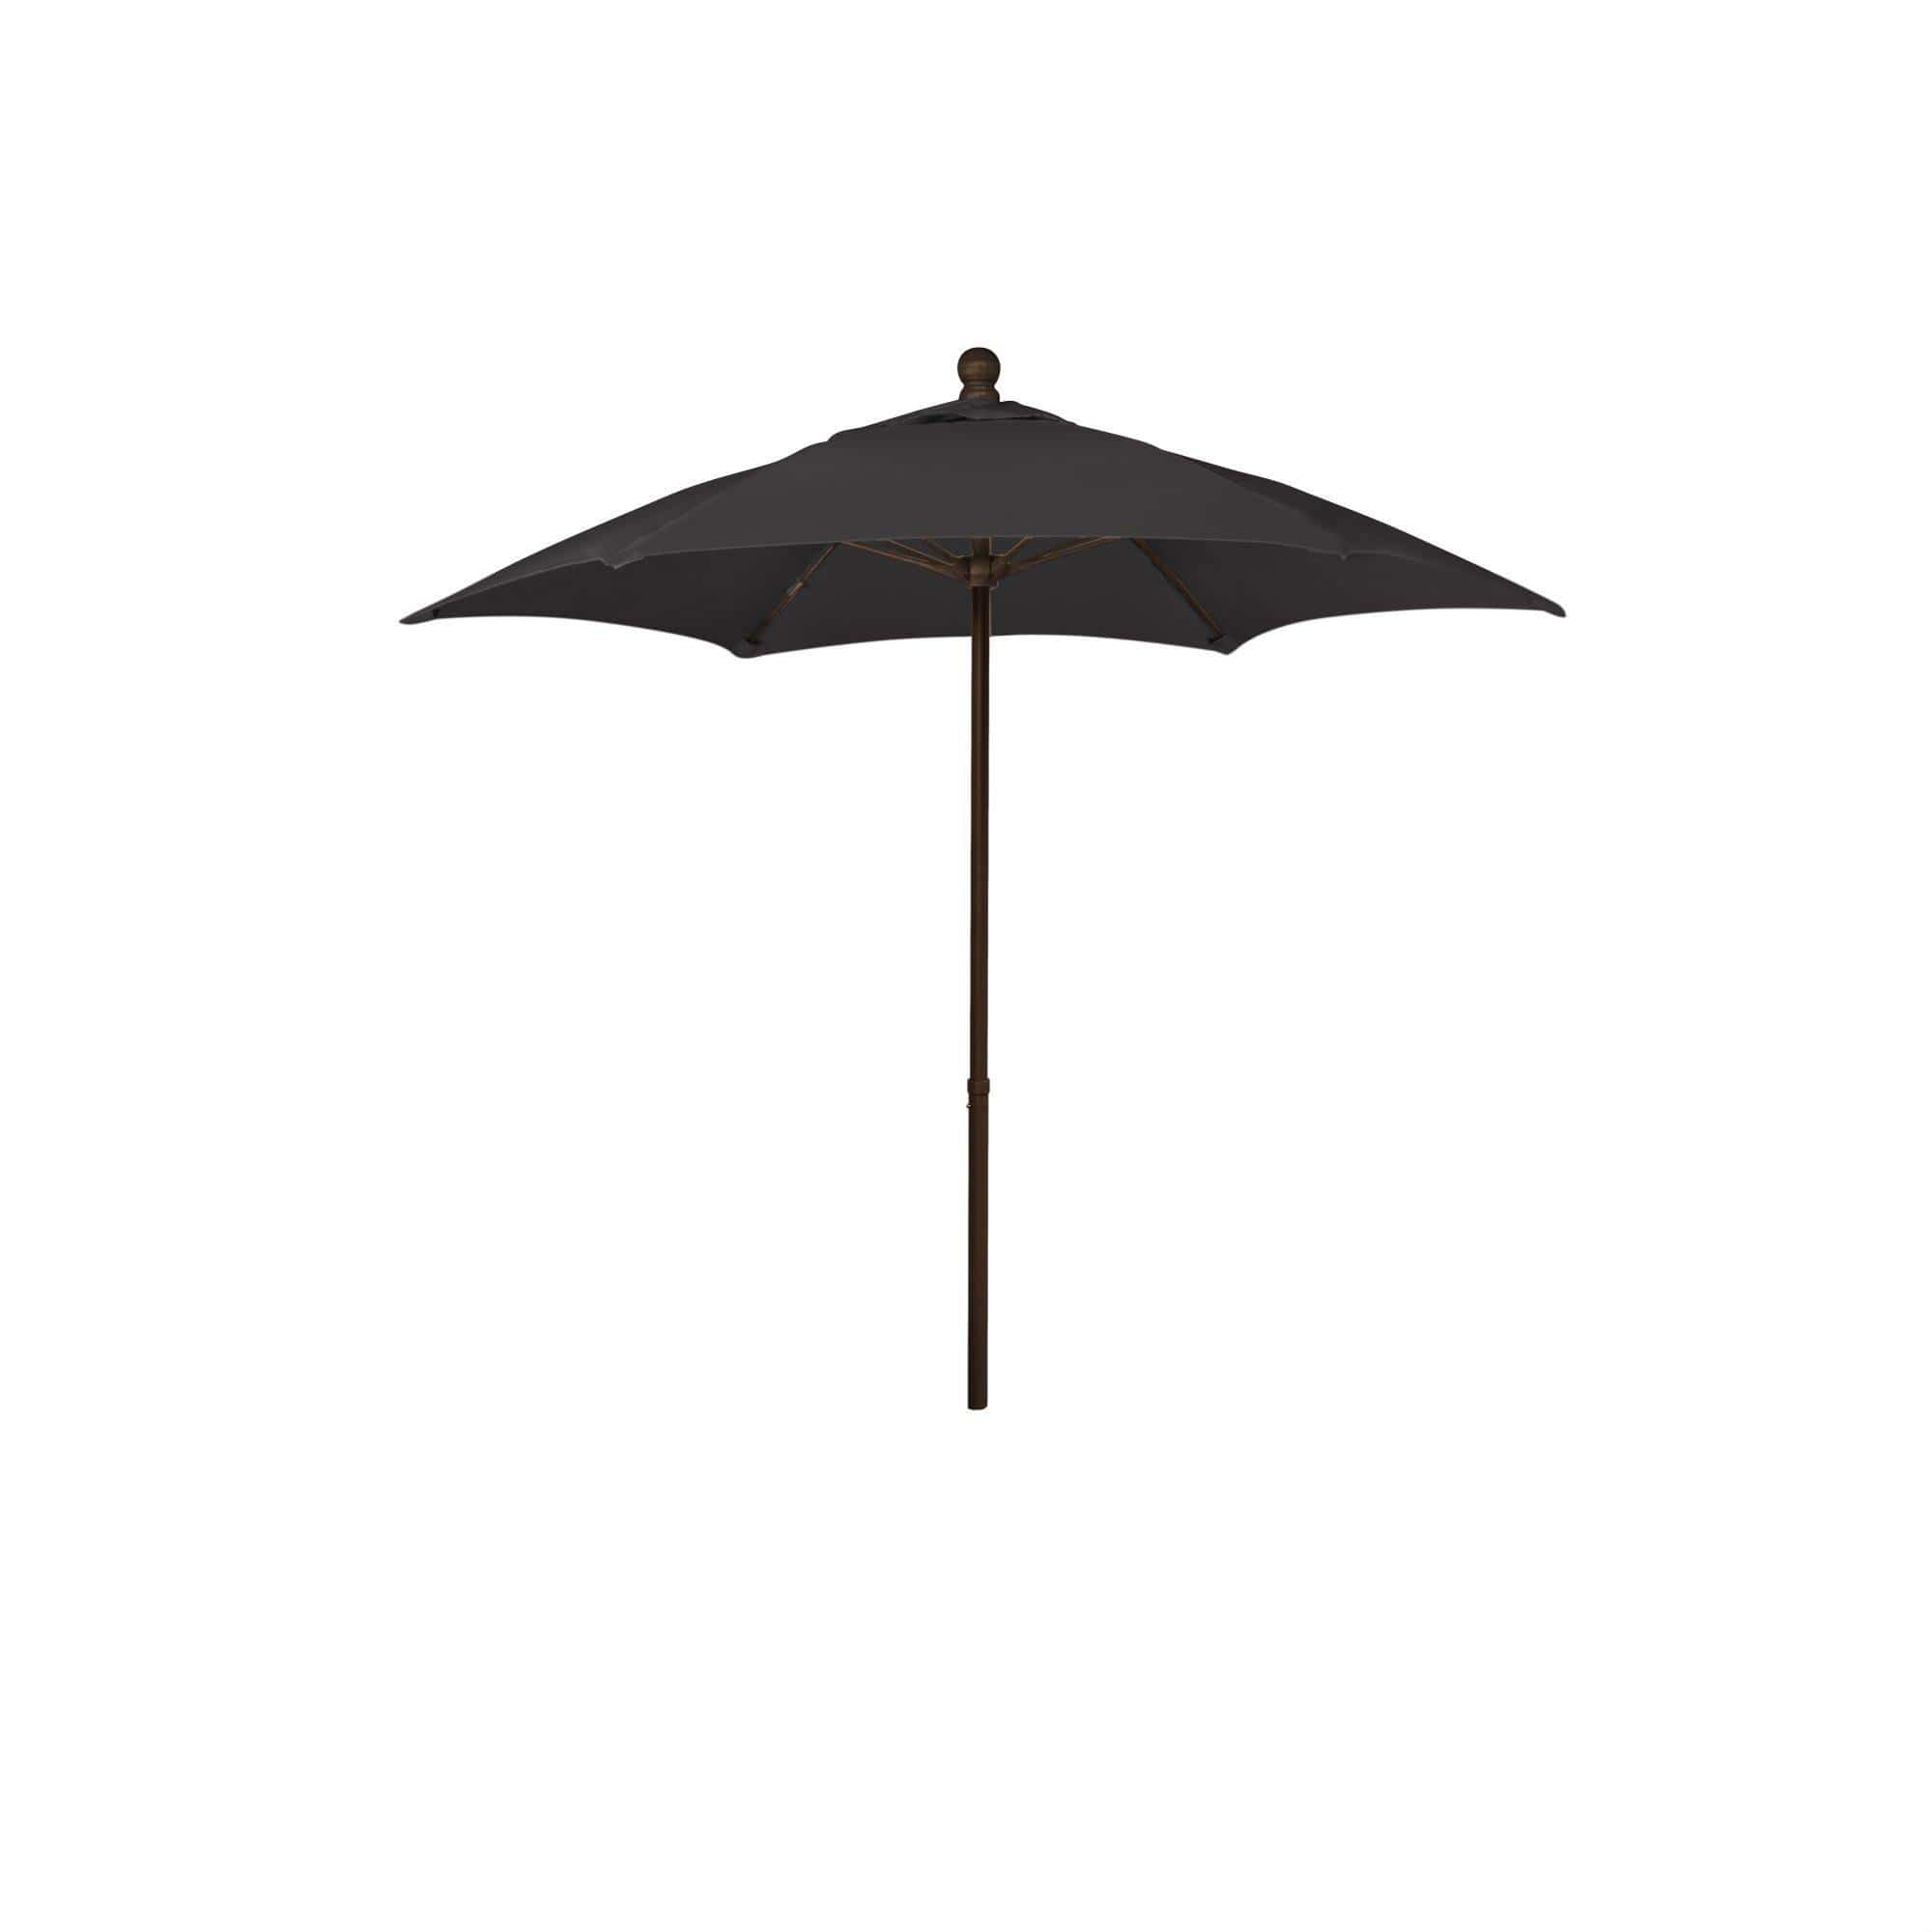 Fiberbuilt Table Umbrellas Black 7.5' Hex Terrace Umbrella 6 Rib Push Up Champagne Bronze  Solution Dyed Acrylic Canopy